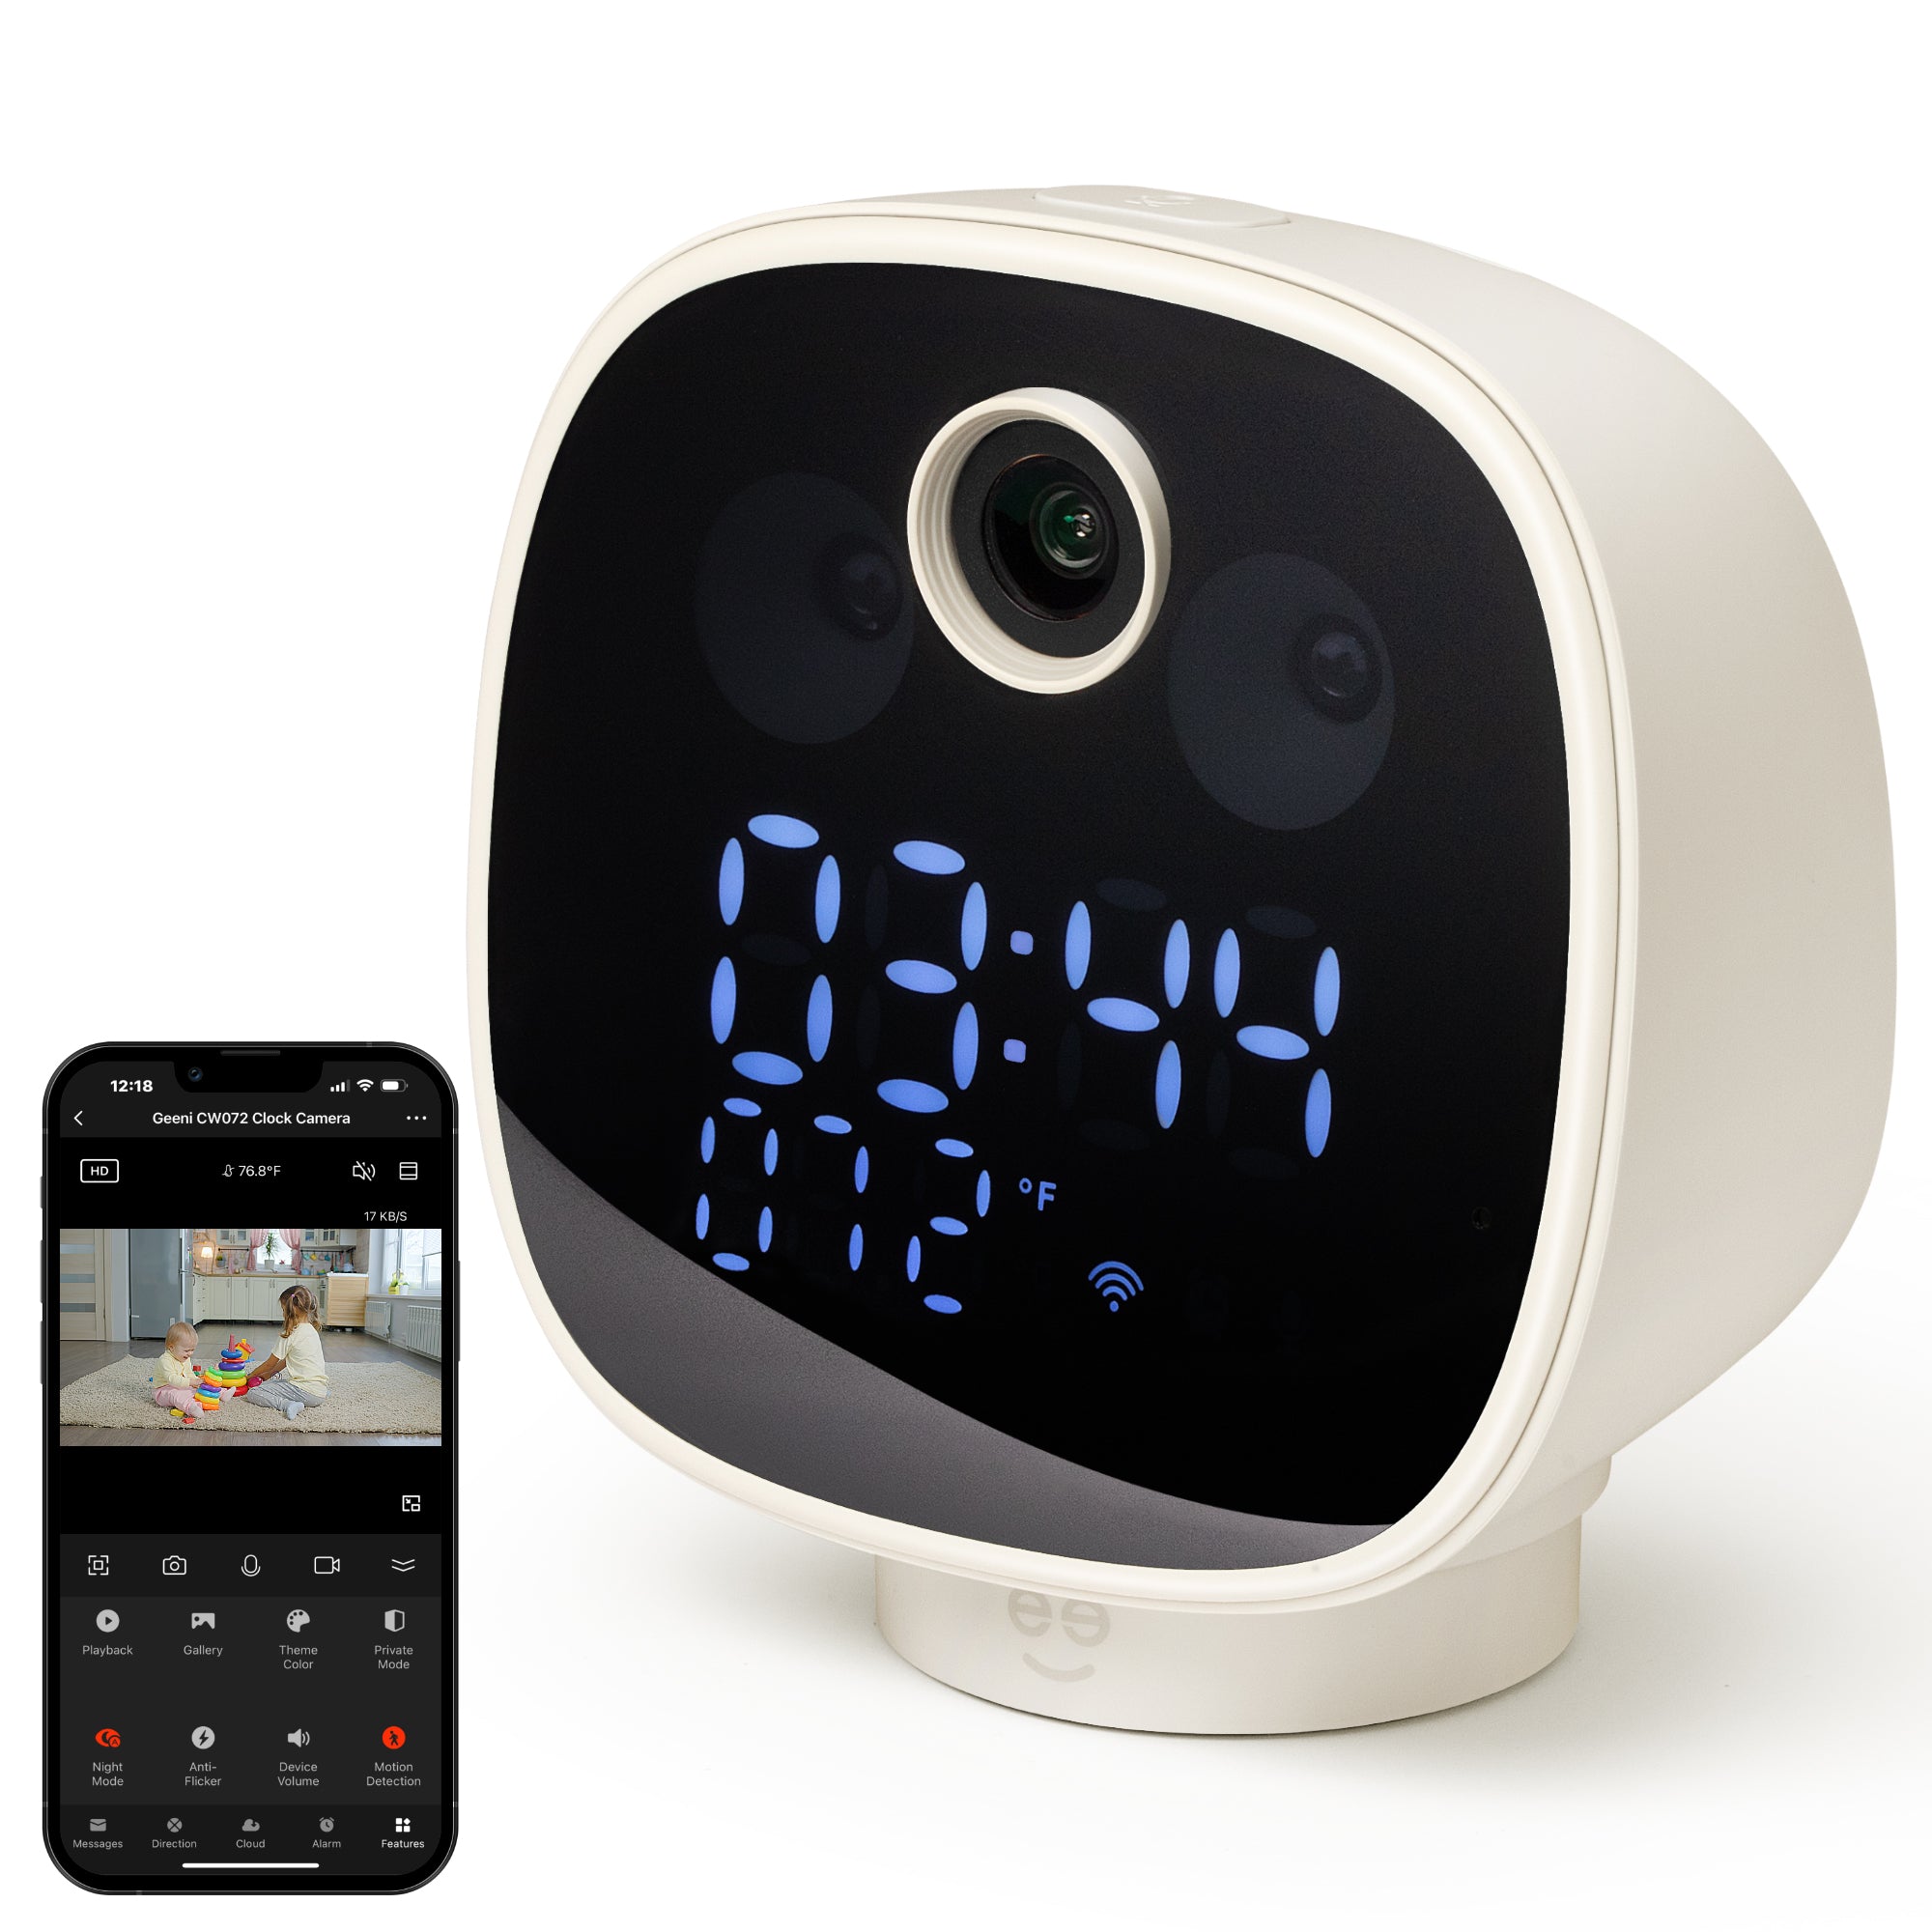 Geeni Serenity Smart Clock Camera